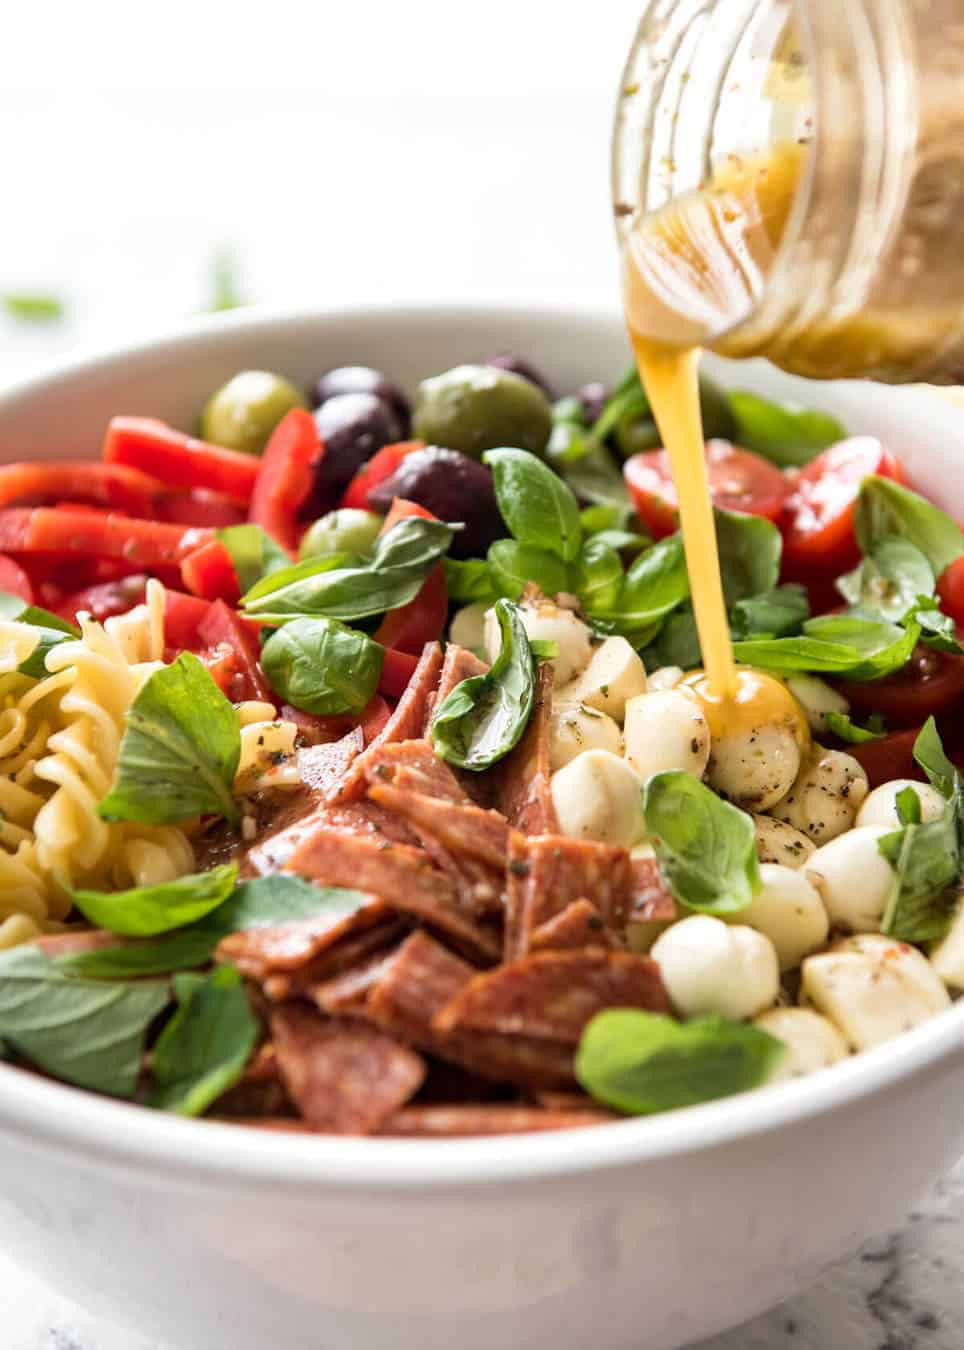 Recipe For Pasta Salad With Italian Dressing
 Italian Pasta Salad with Homemade Italian Dressing